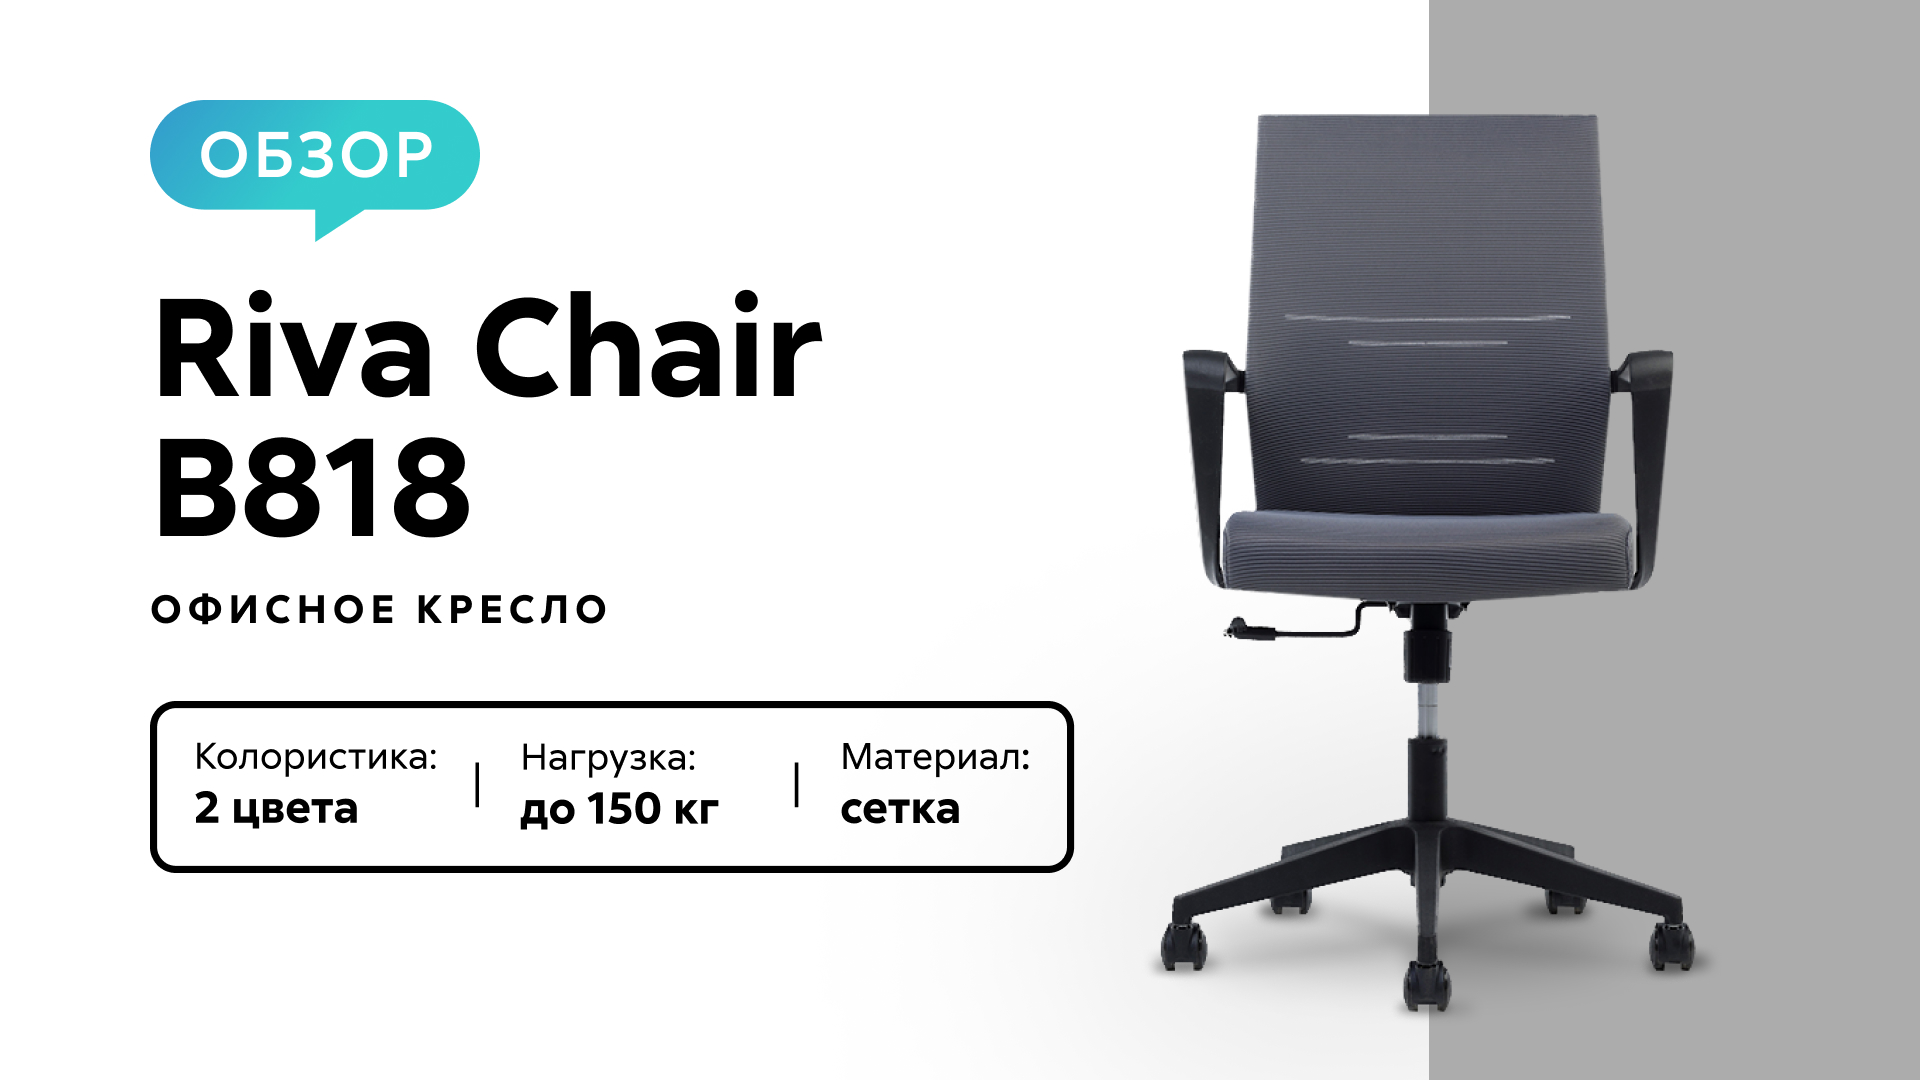 Обзор офисного кресла Riva Chair B818